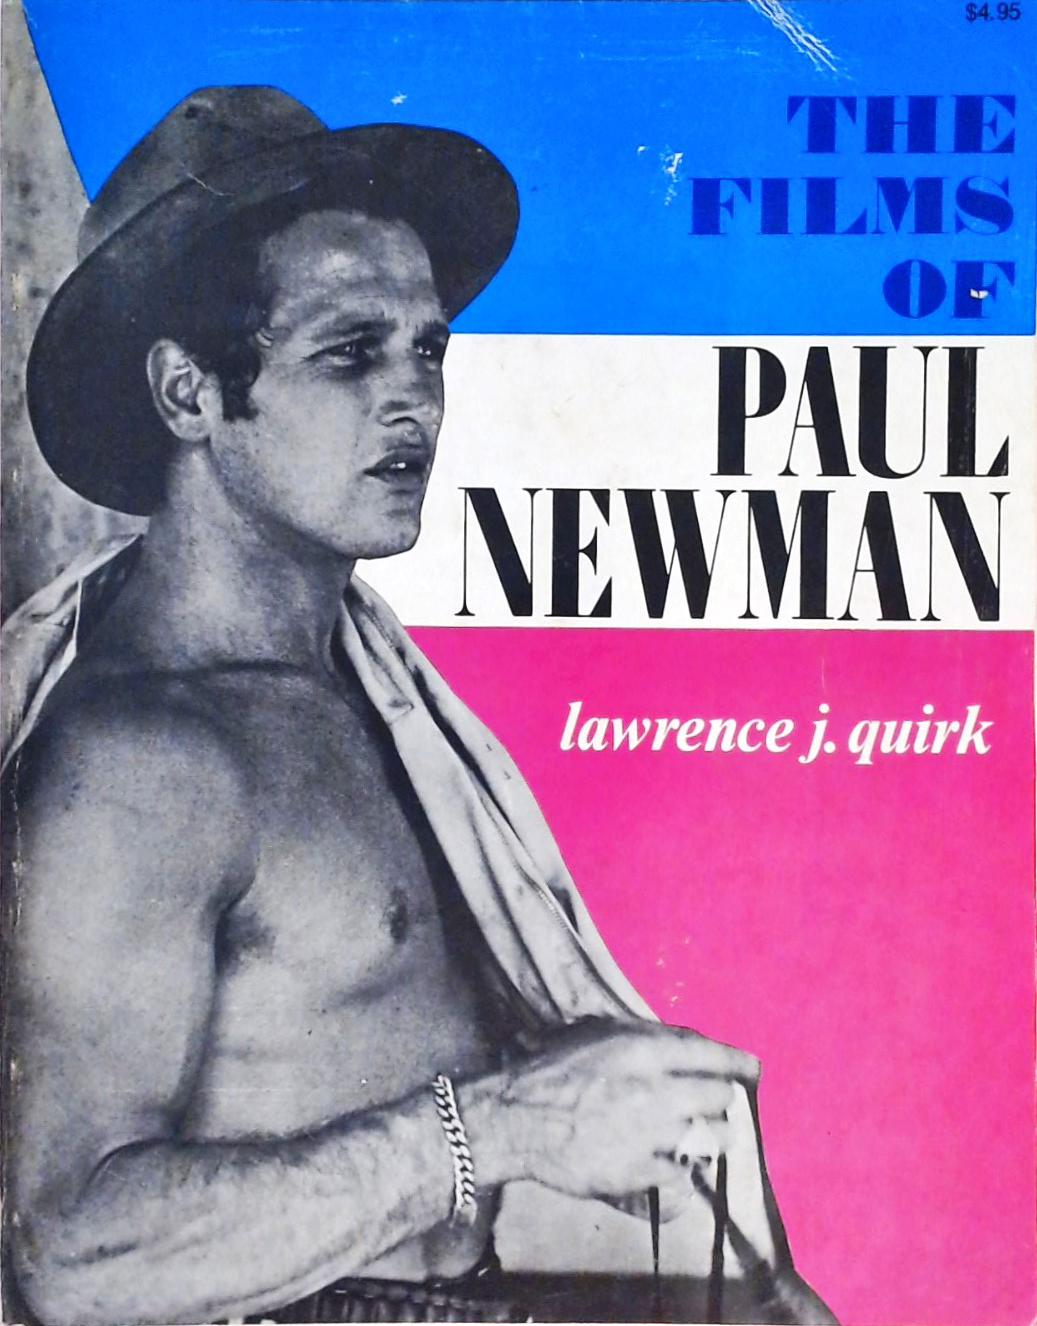 Films of Paul Newman